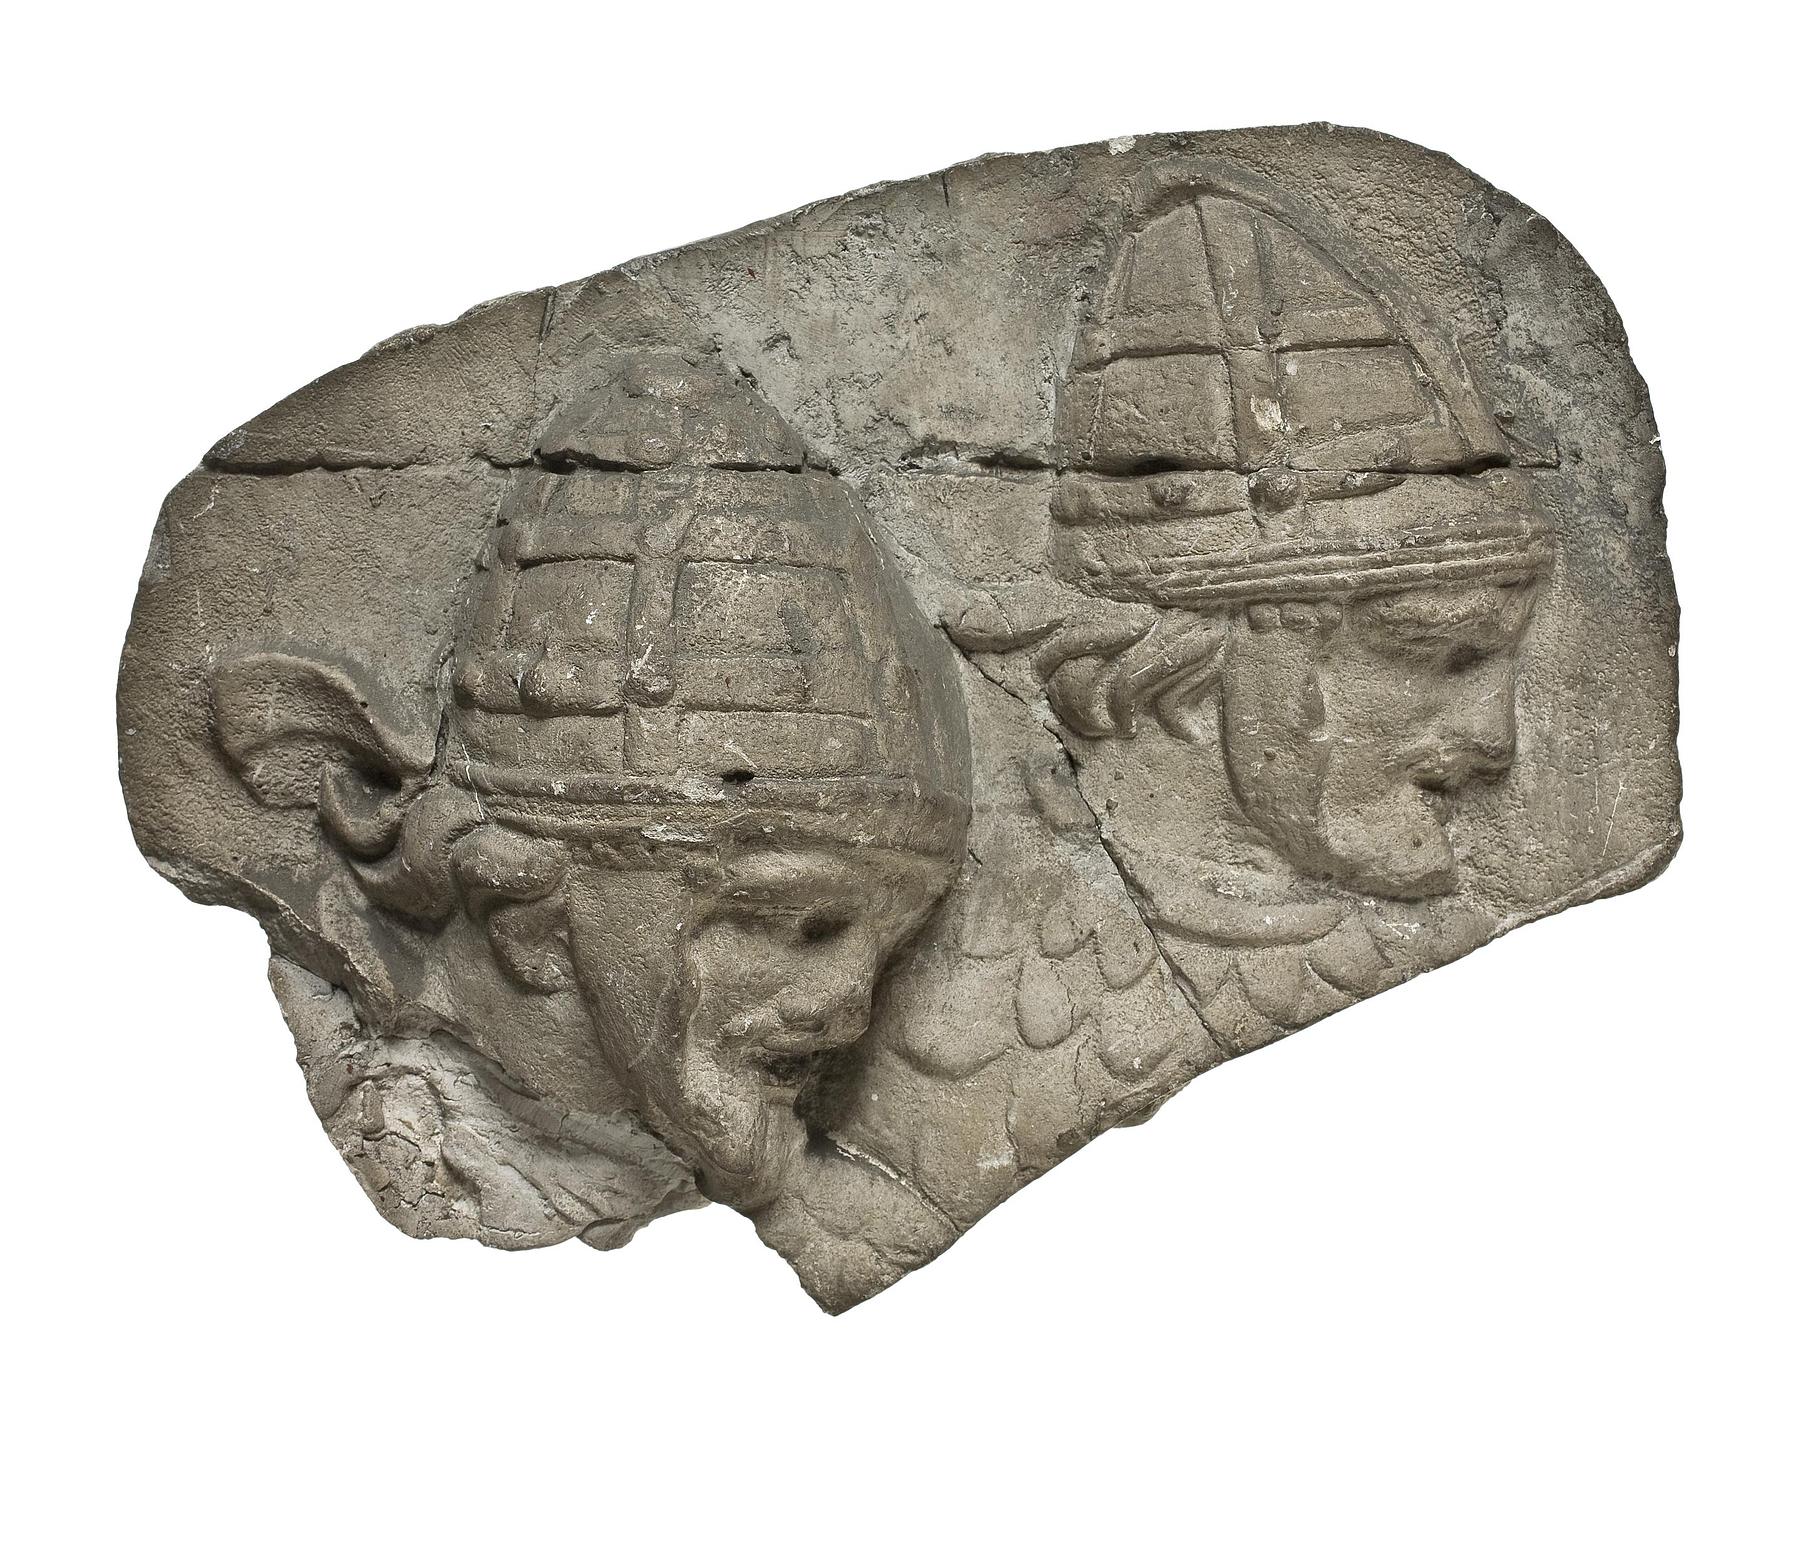 Heads of Sarmatian horsemen wearing conical helmets, L333a